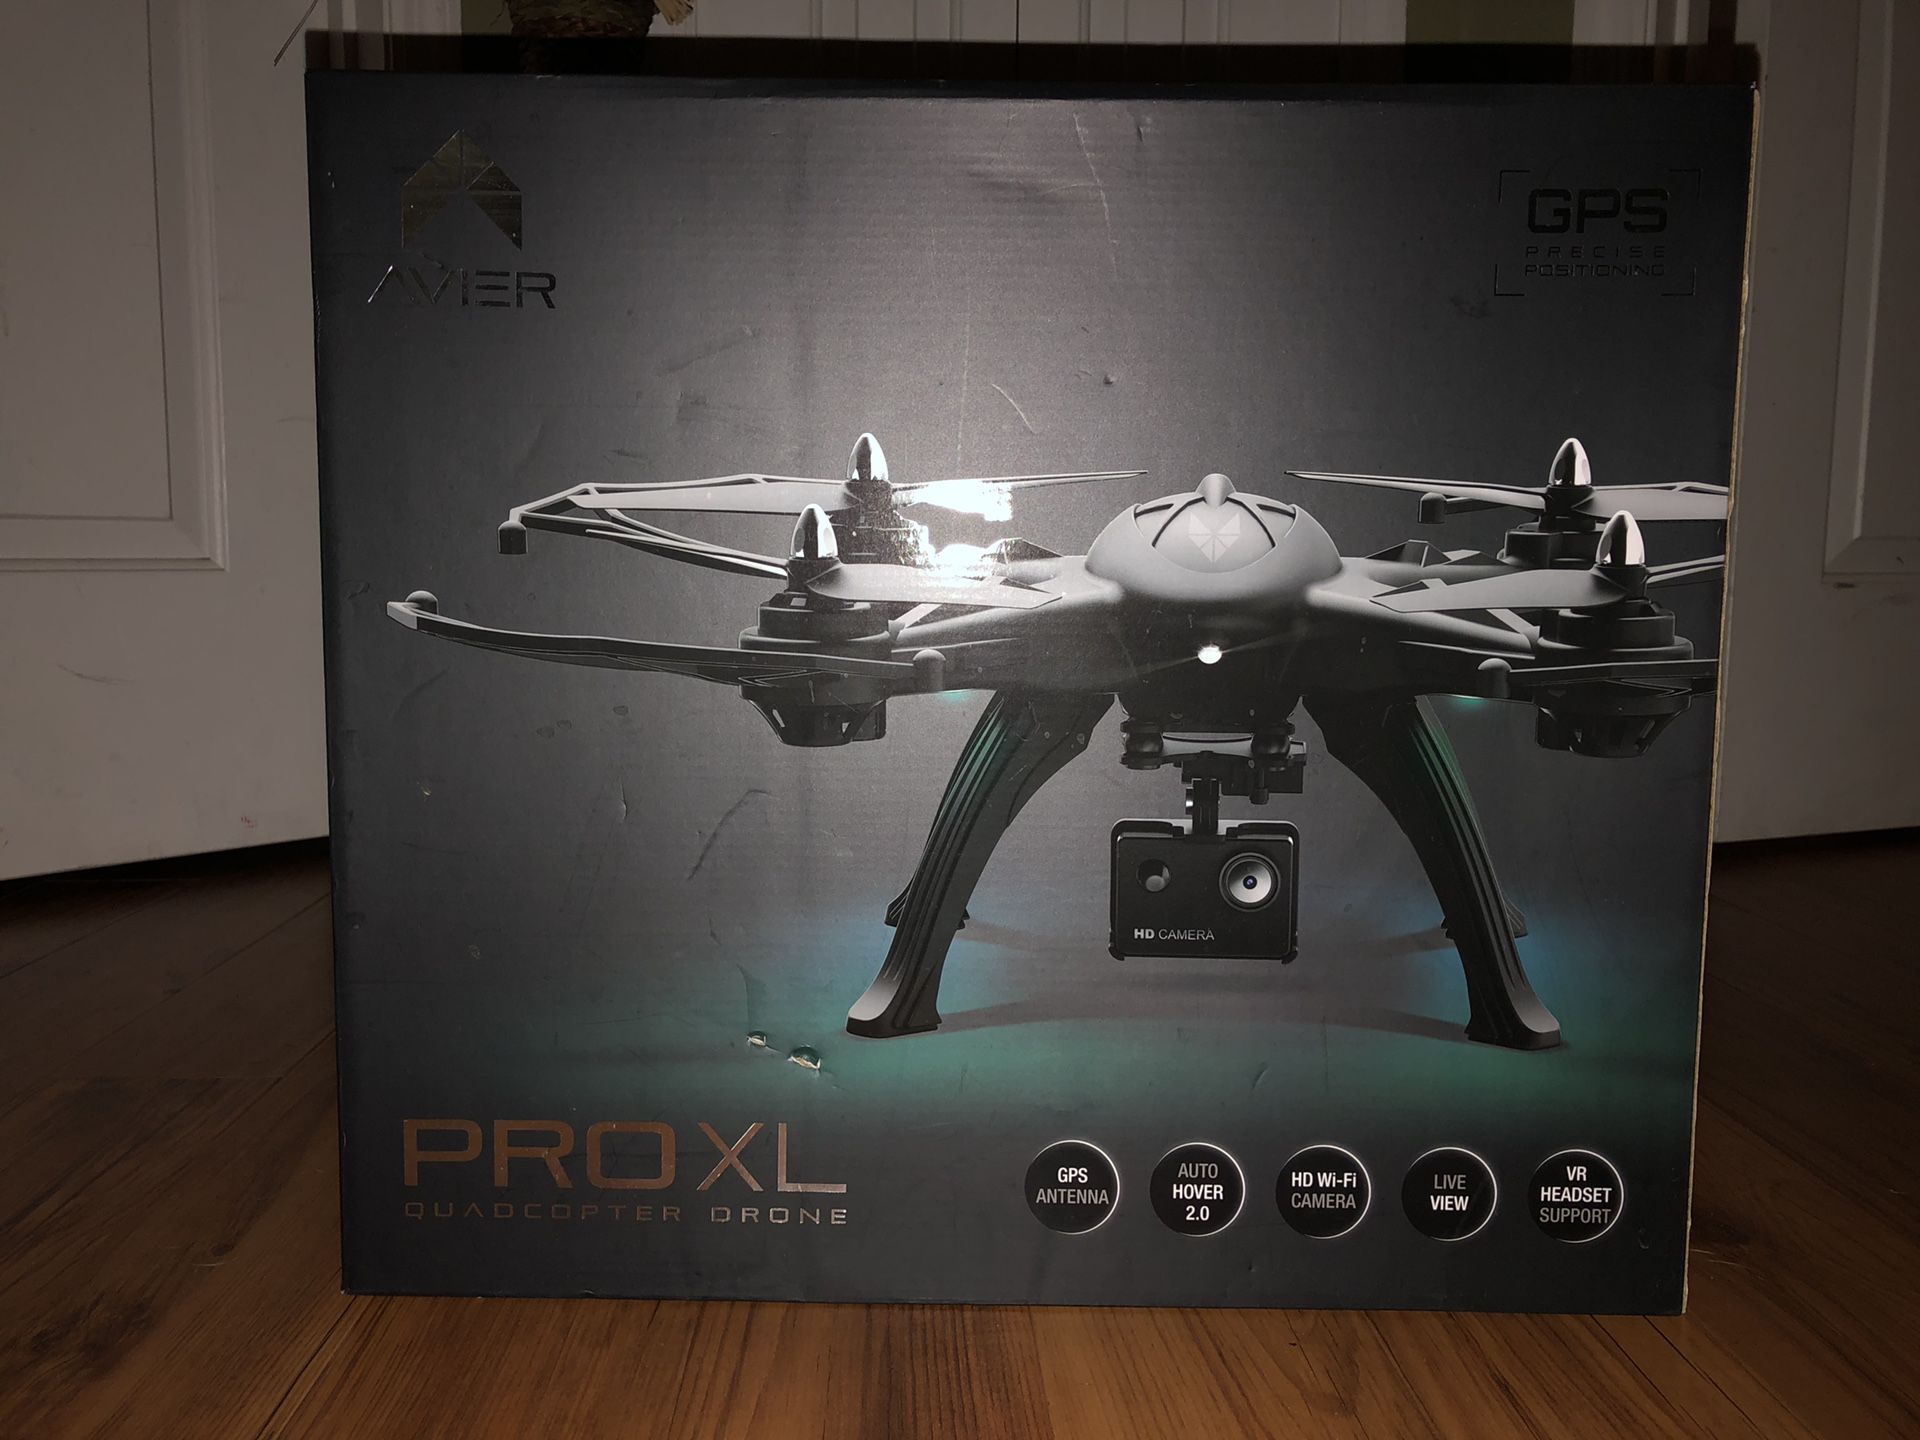 AVIER PRO XL Quadcopter Drone